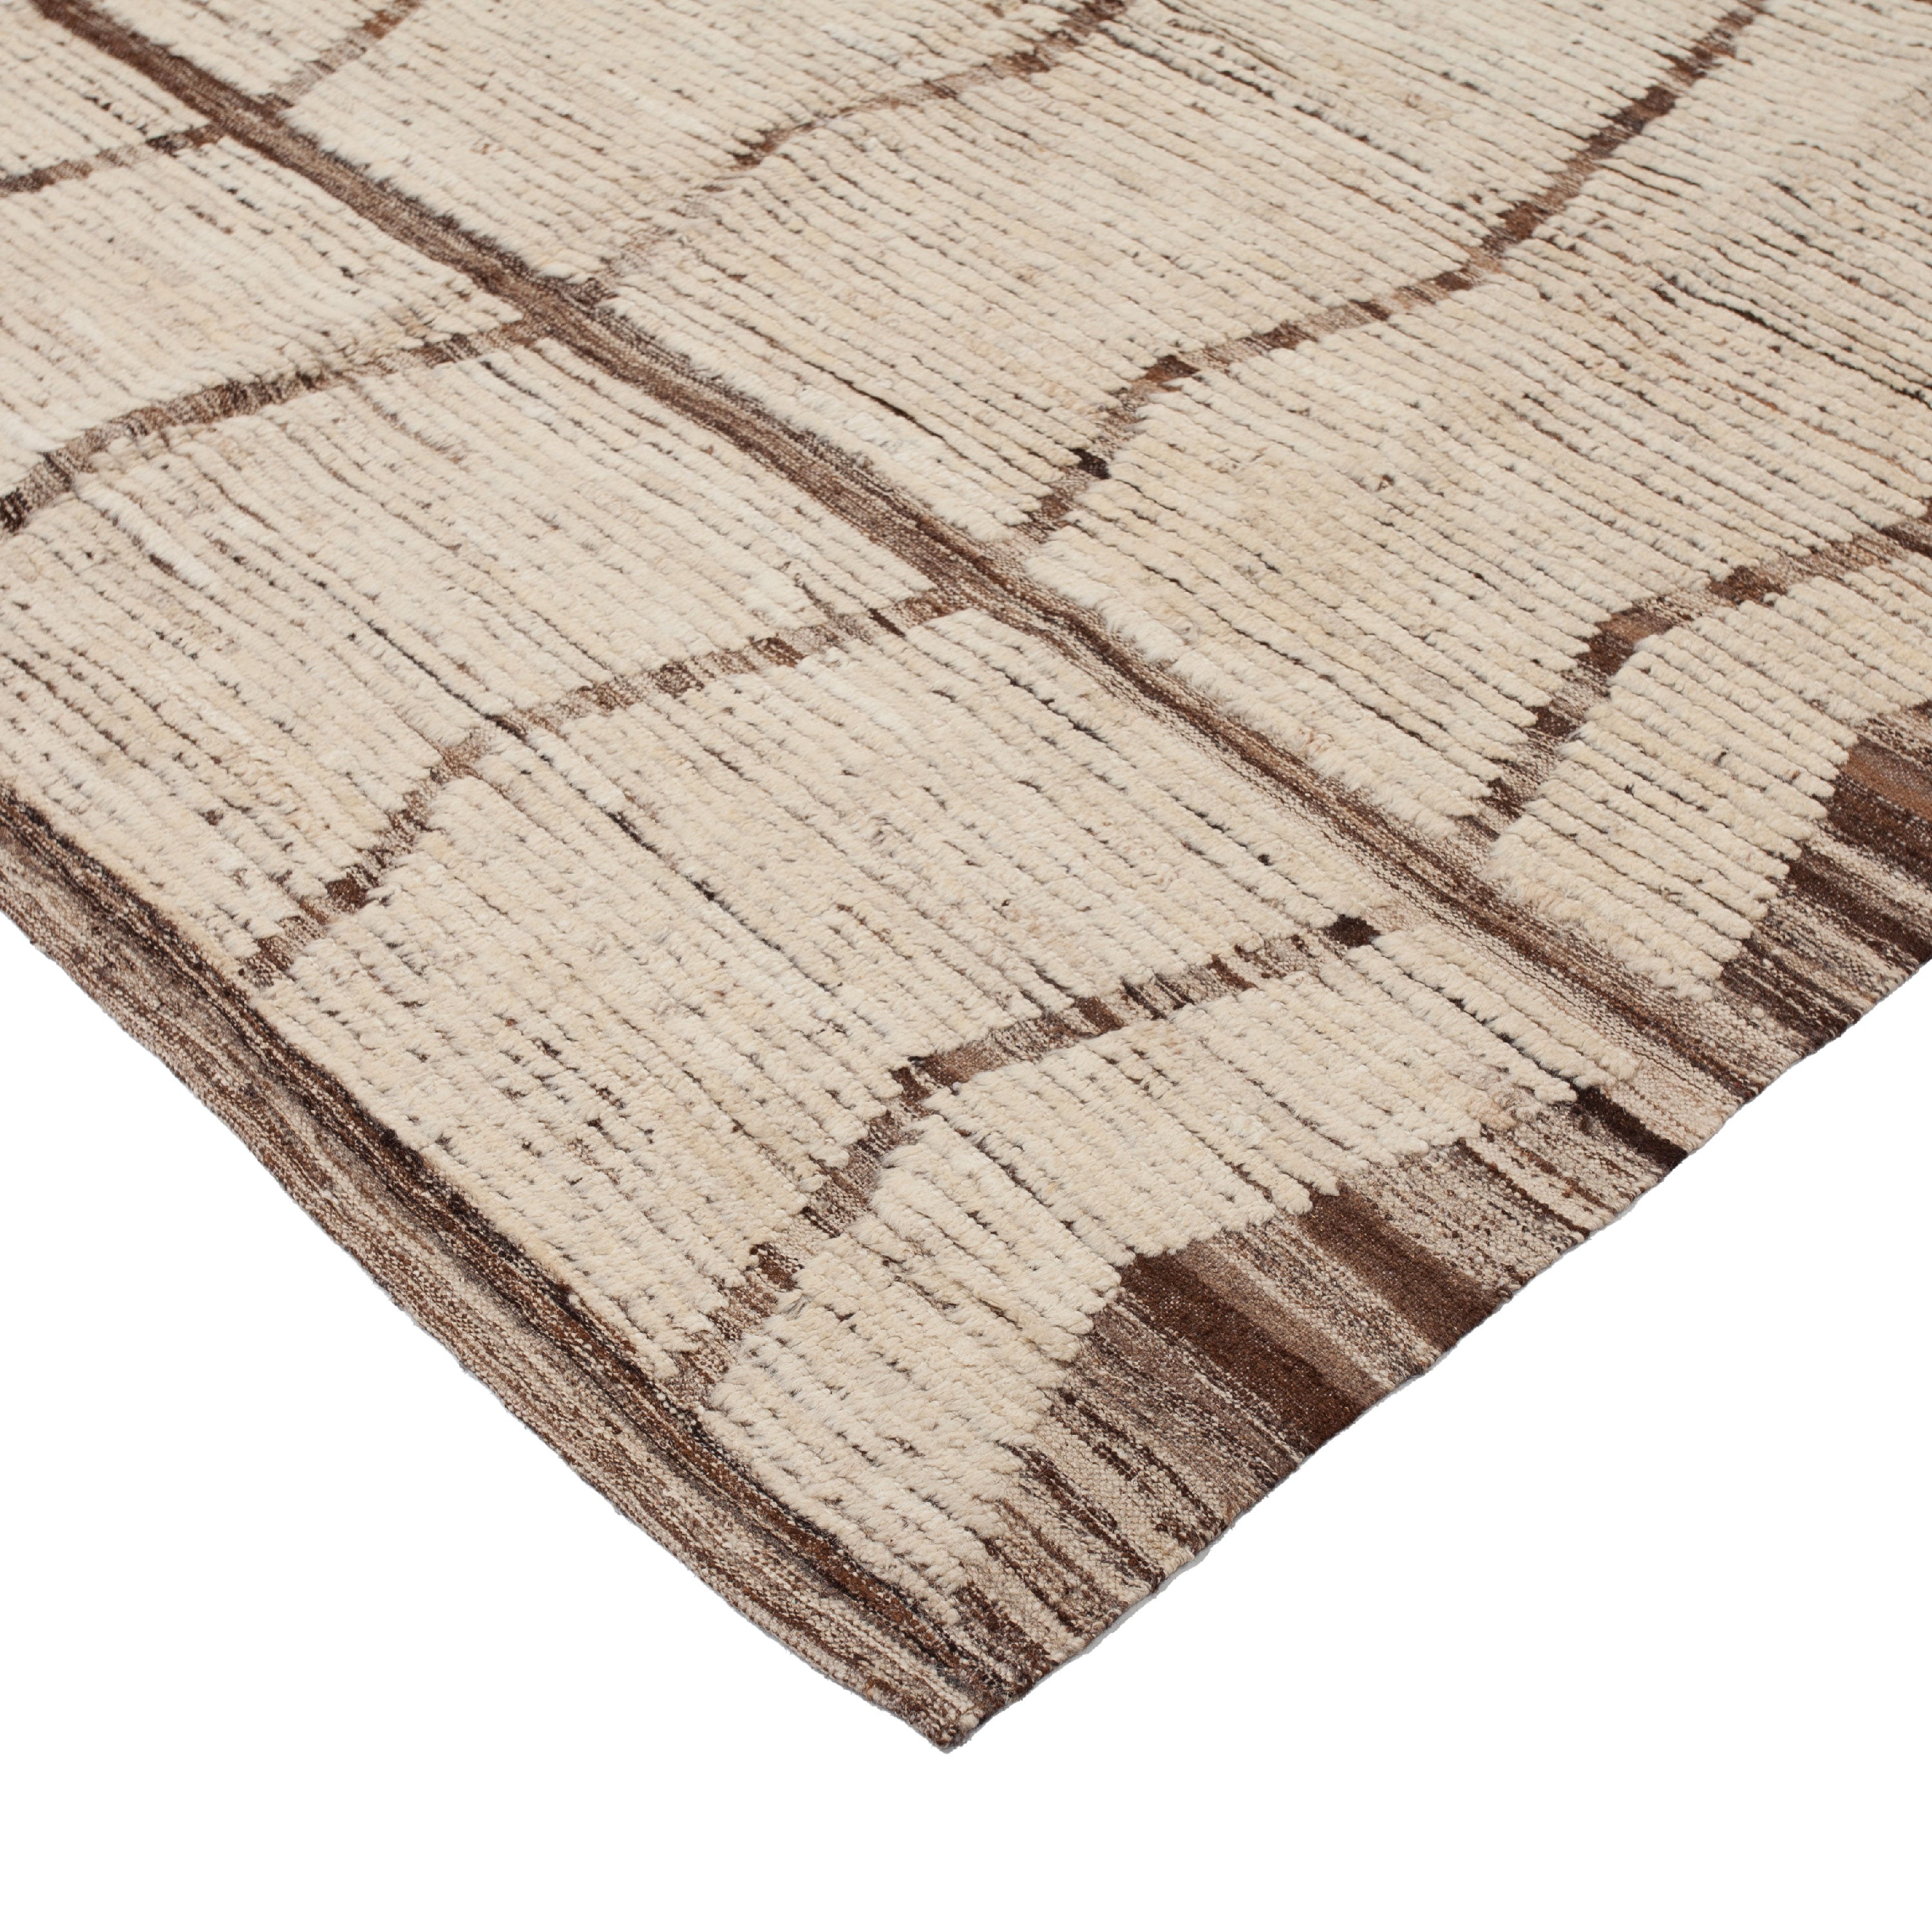 Zameen Patterned Modern Wool Rug - 6'9" x 10'6" Default Title